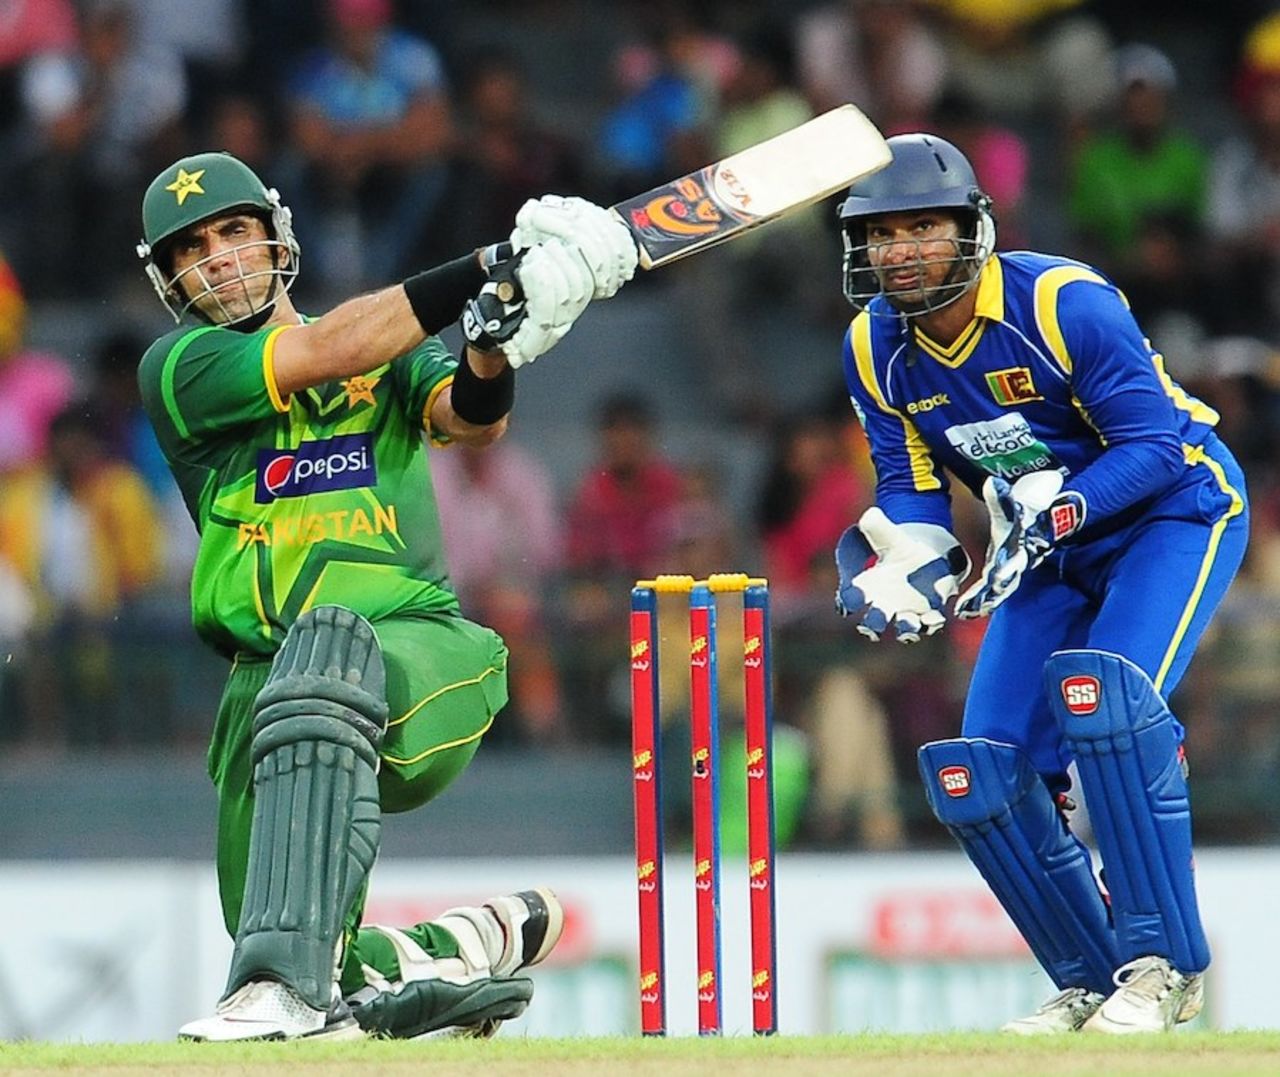 Misbah-ul-Haq slog sweeps, Sri Lanka v Pakistan, 5th ODI, Premadasa Stadium, Colombo, June 18, 2012